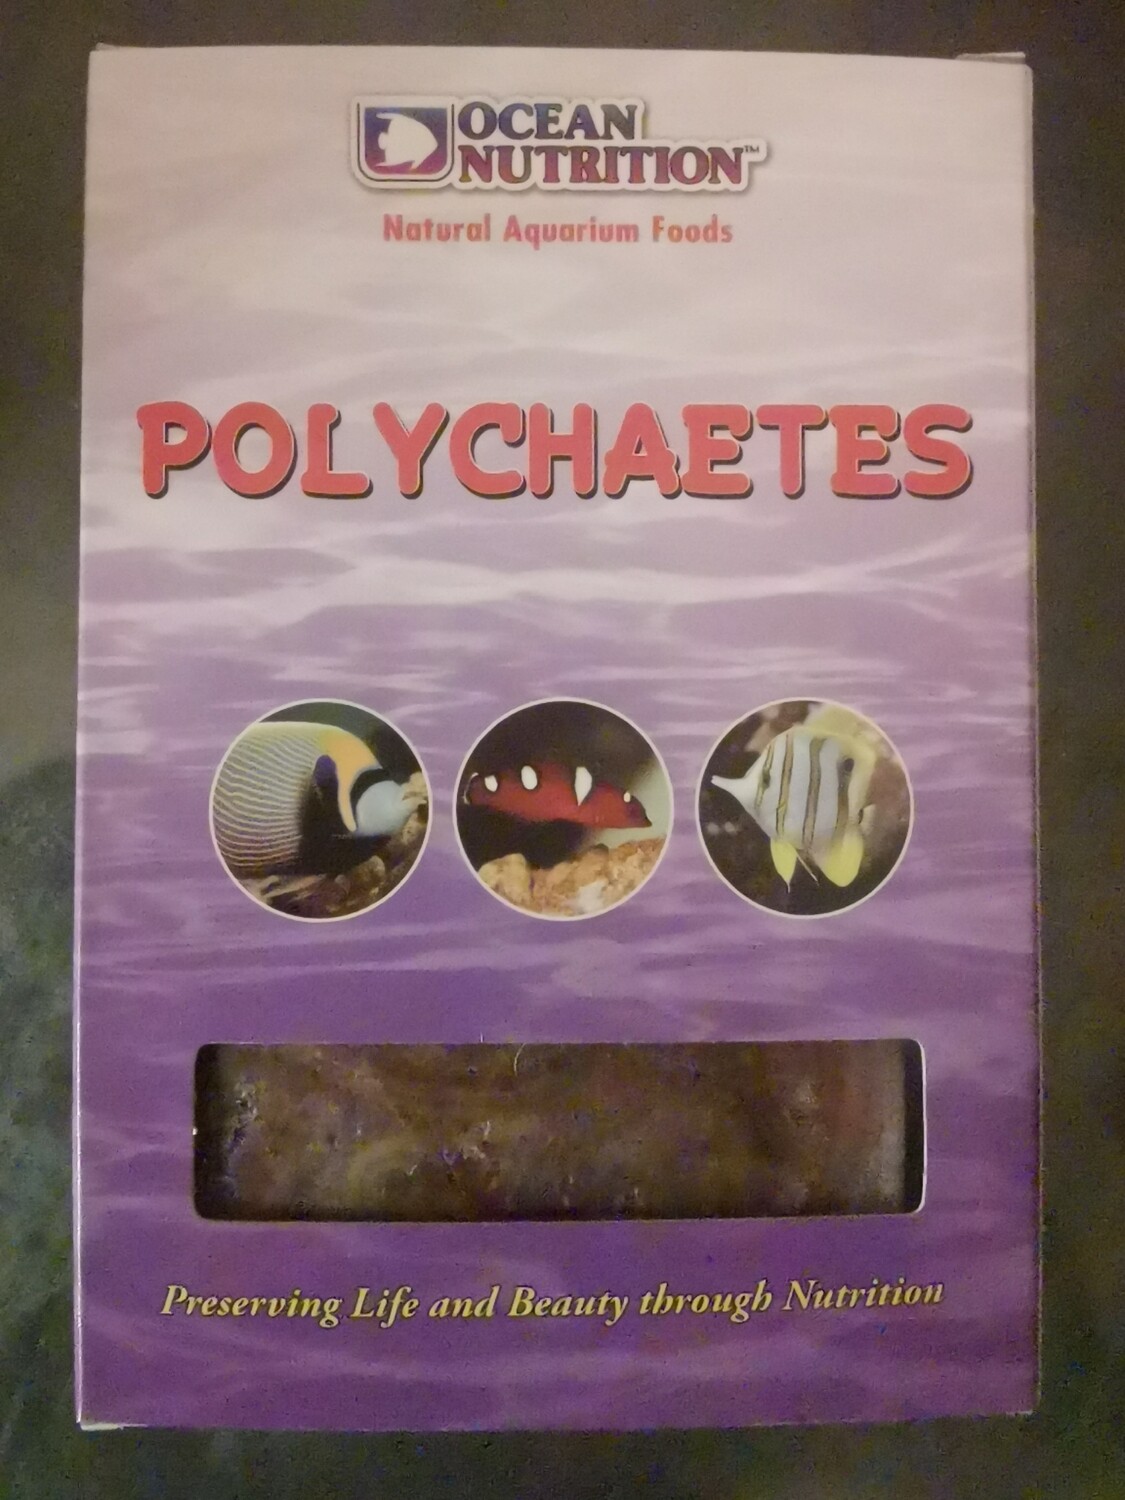 Polycheates